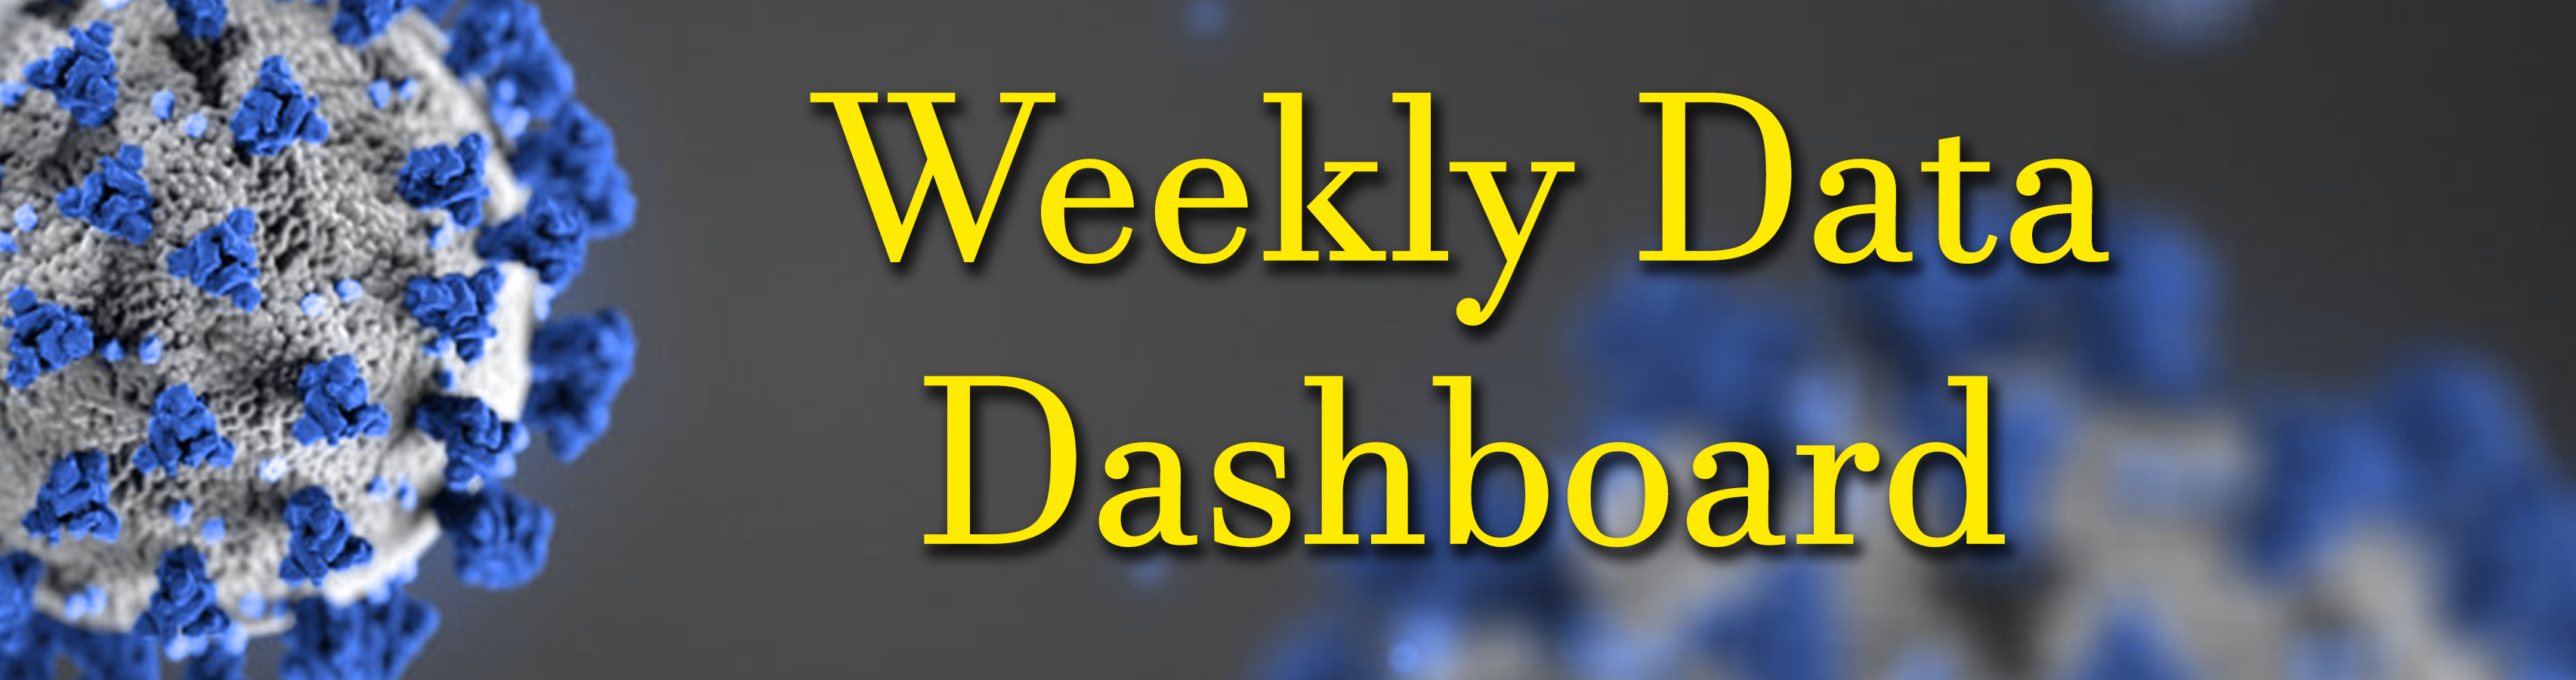 Weekly data dashboard graphic